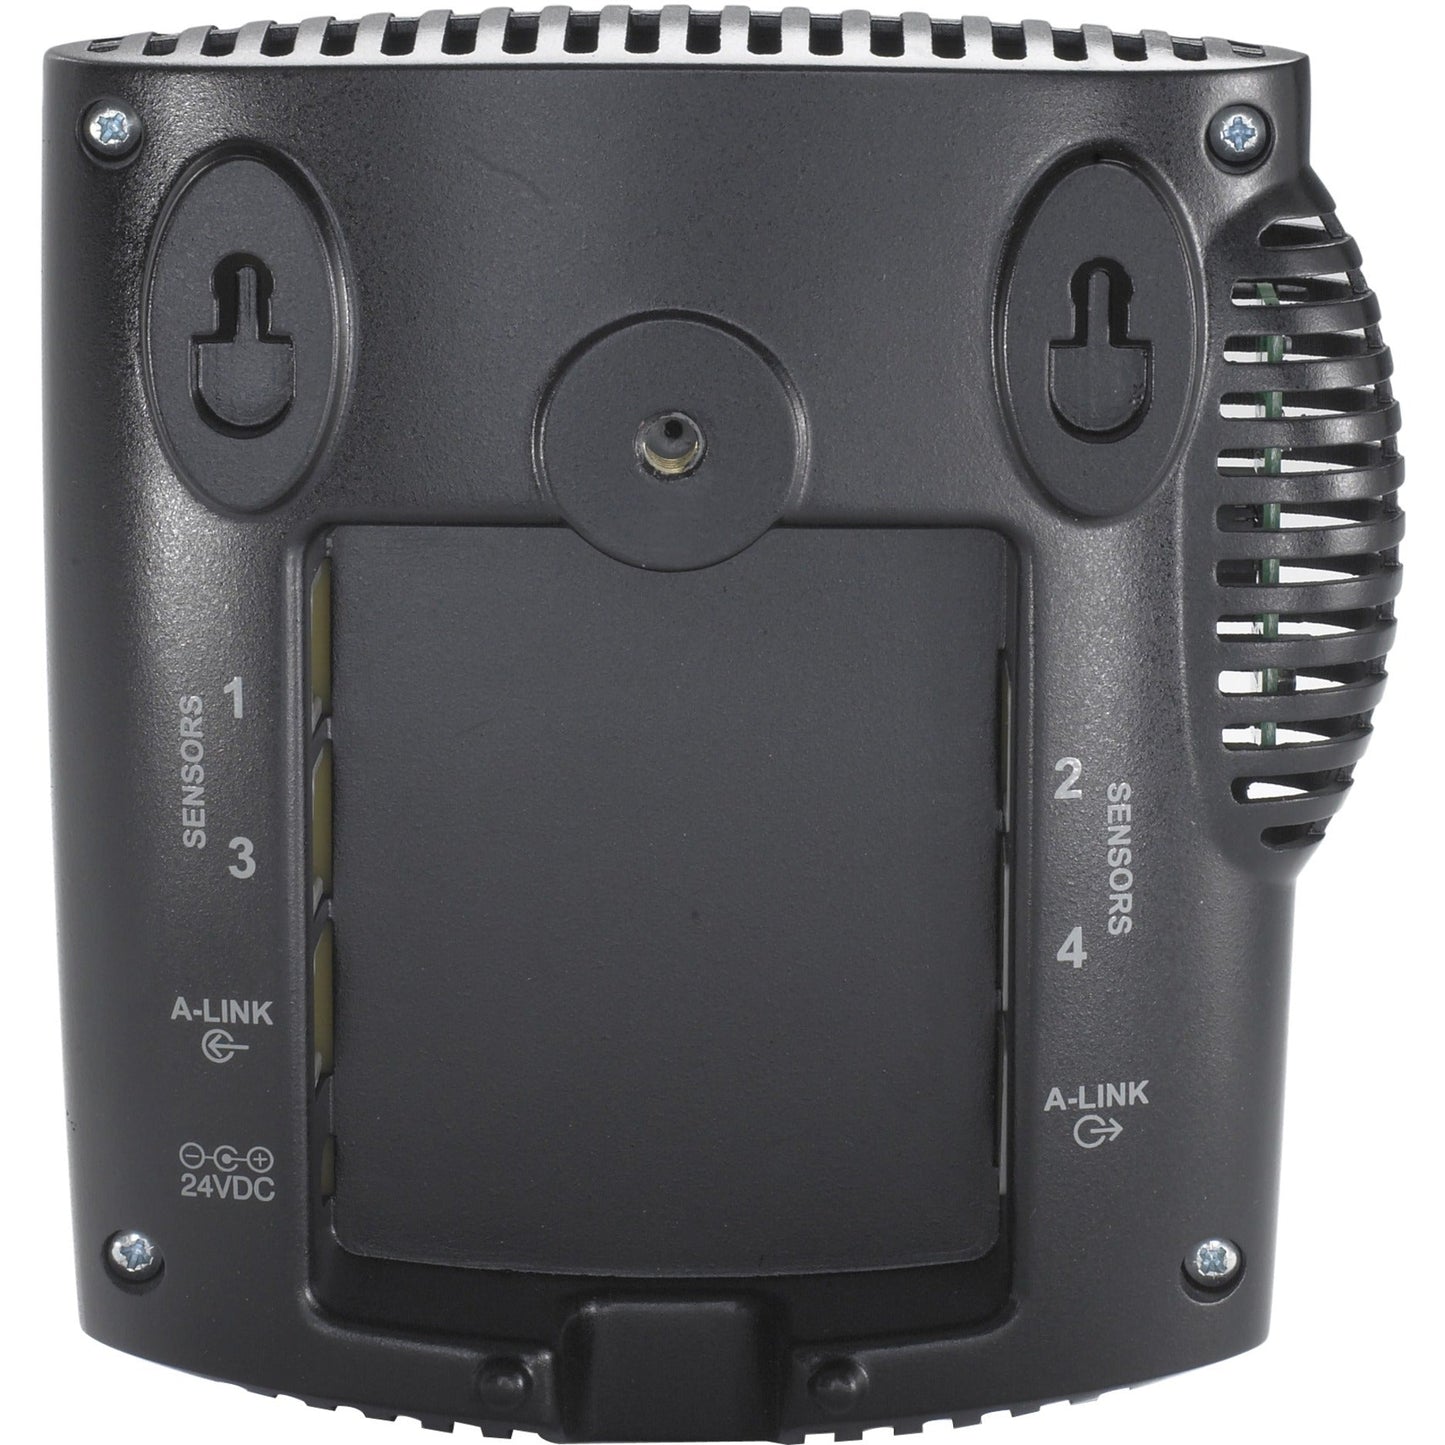 APC by Schneider Electric NetBotz Room Sensor Pod 155